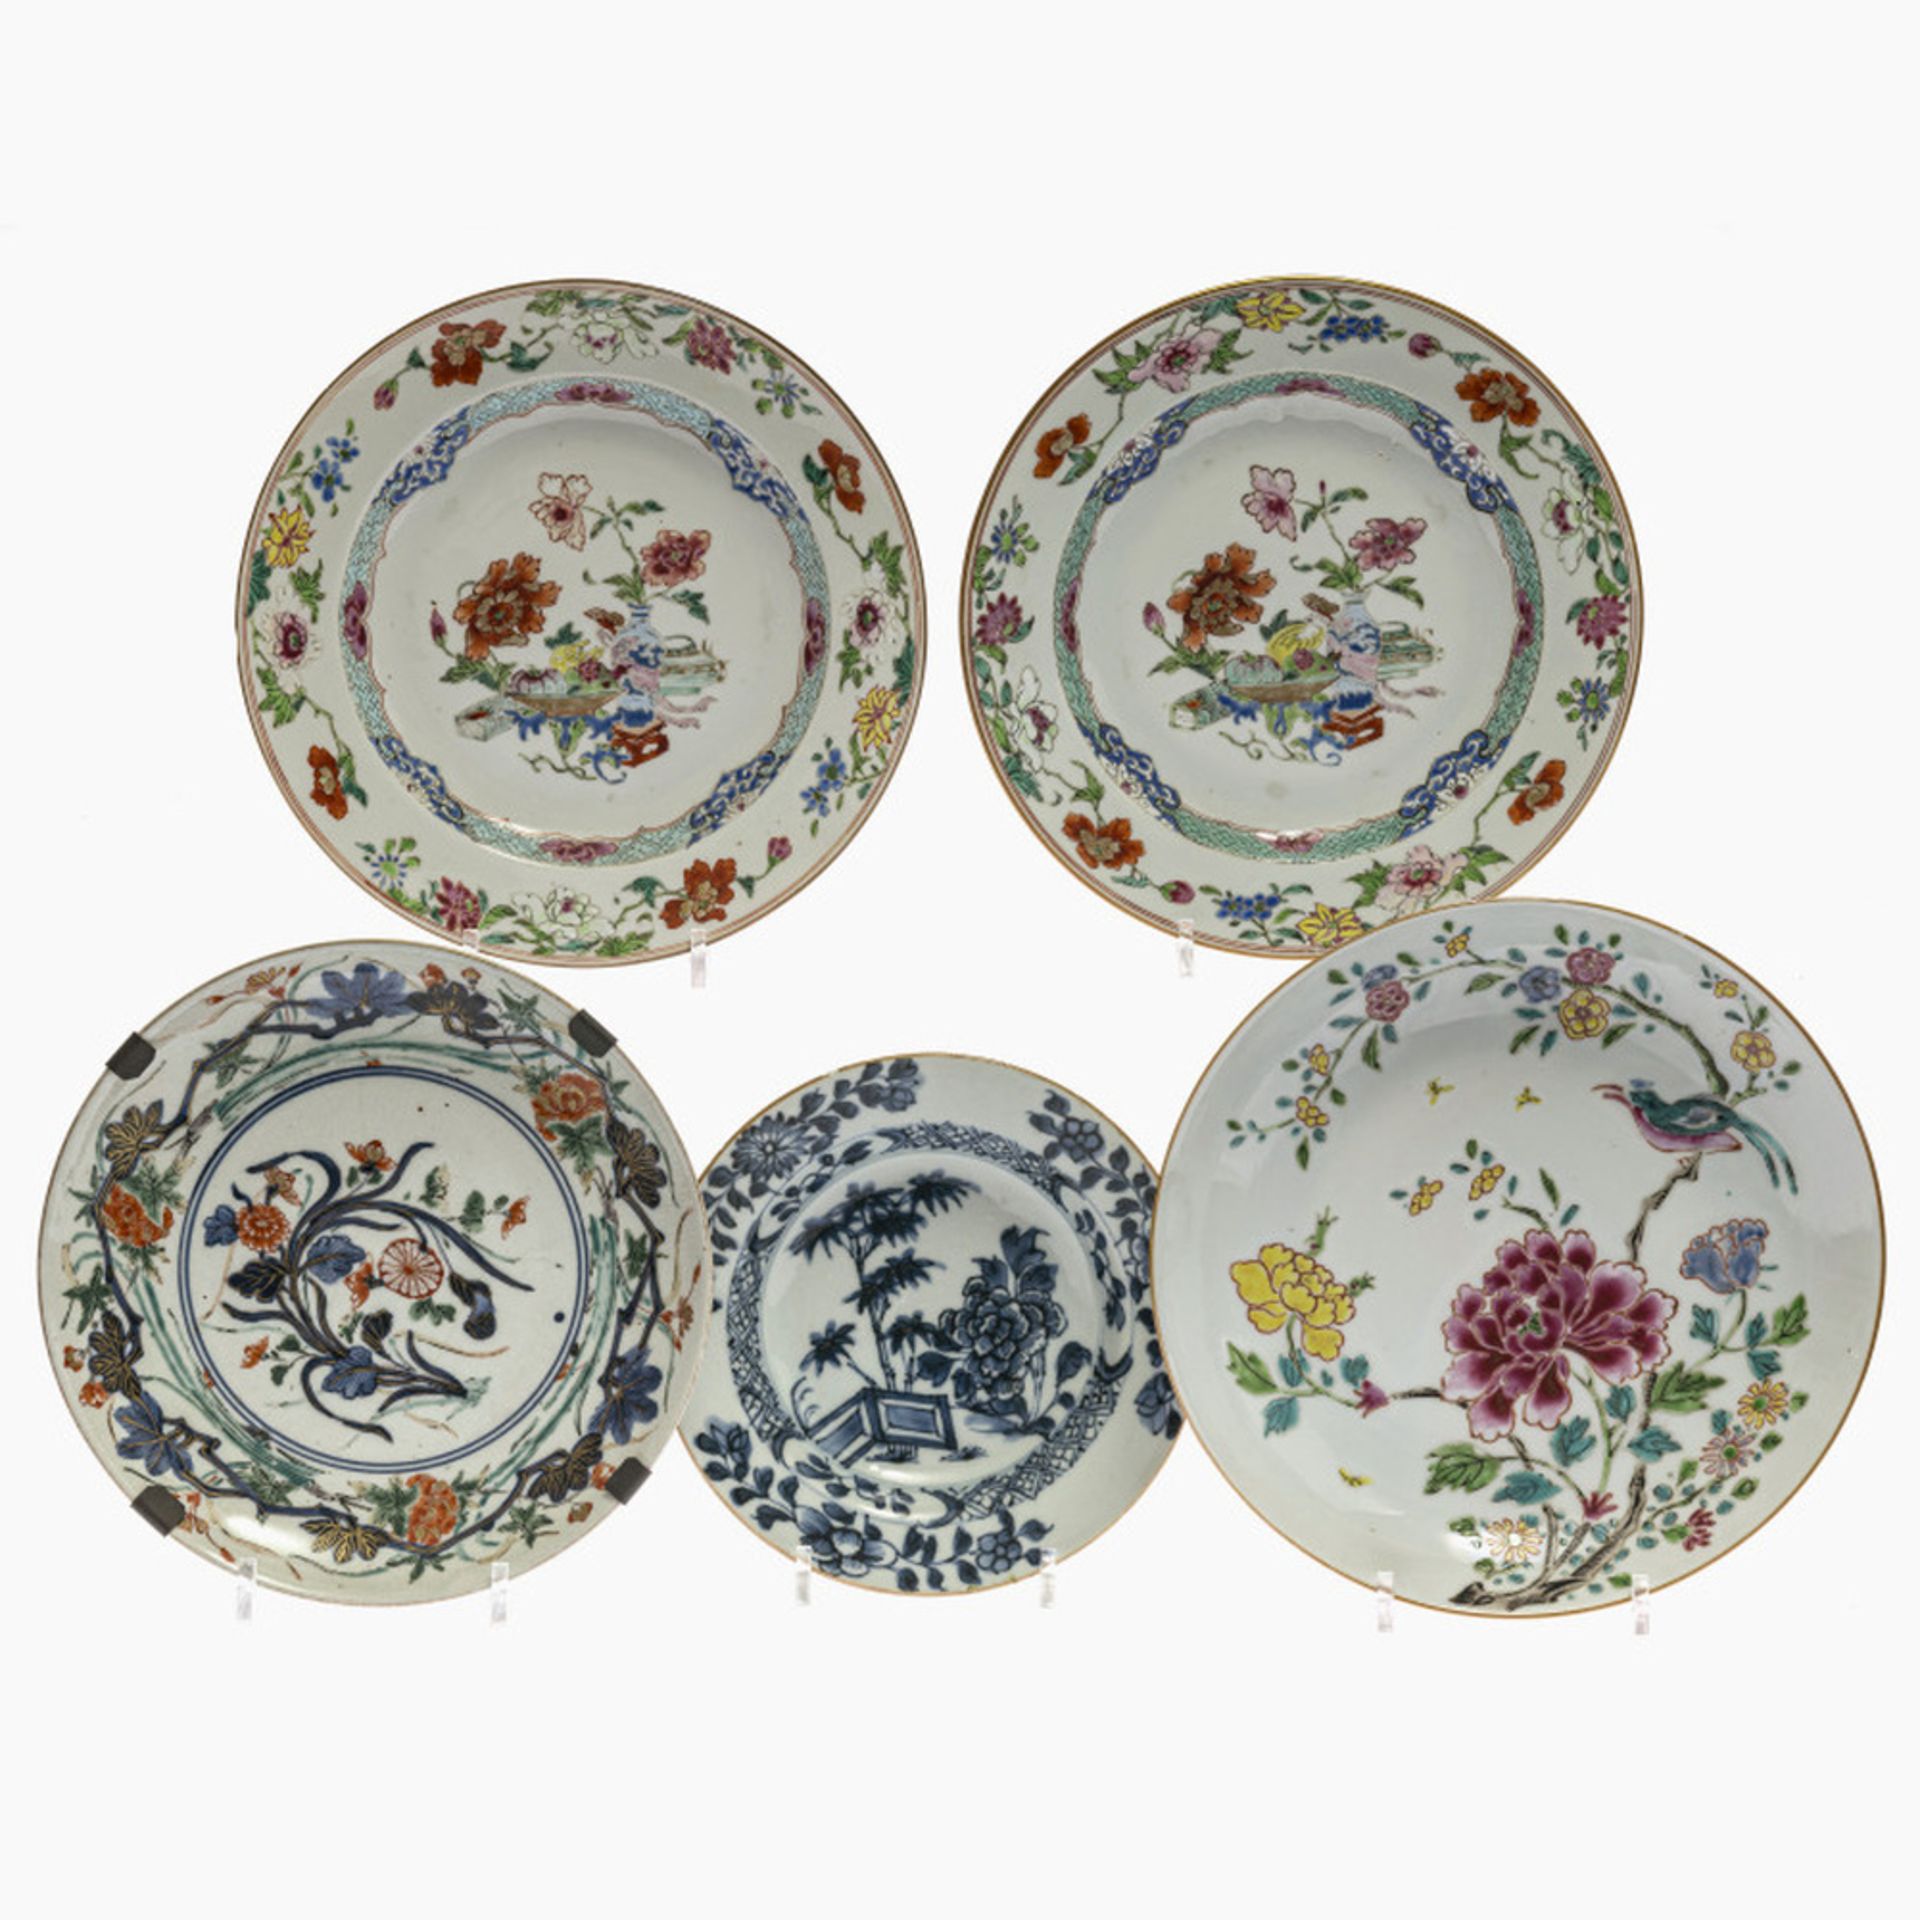 Five plates - China, Qing